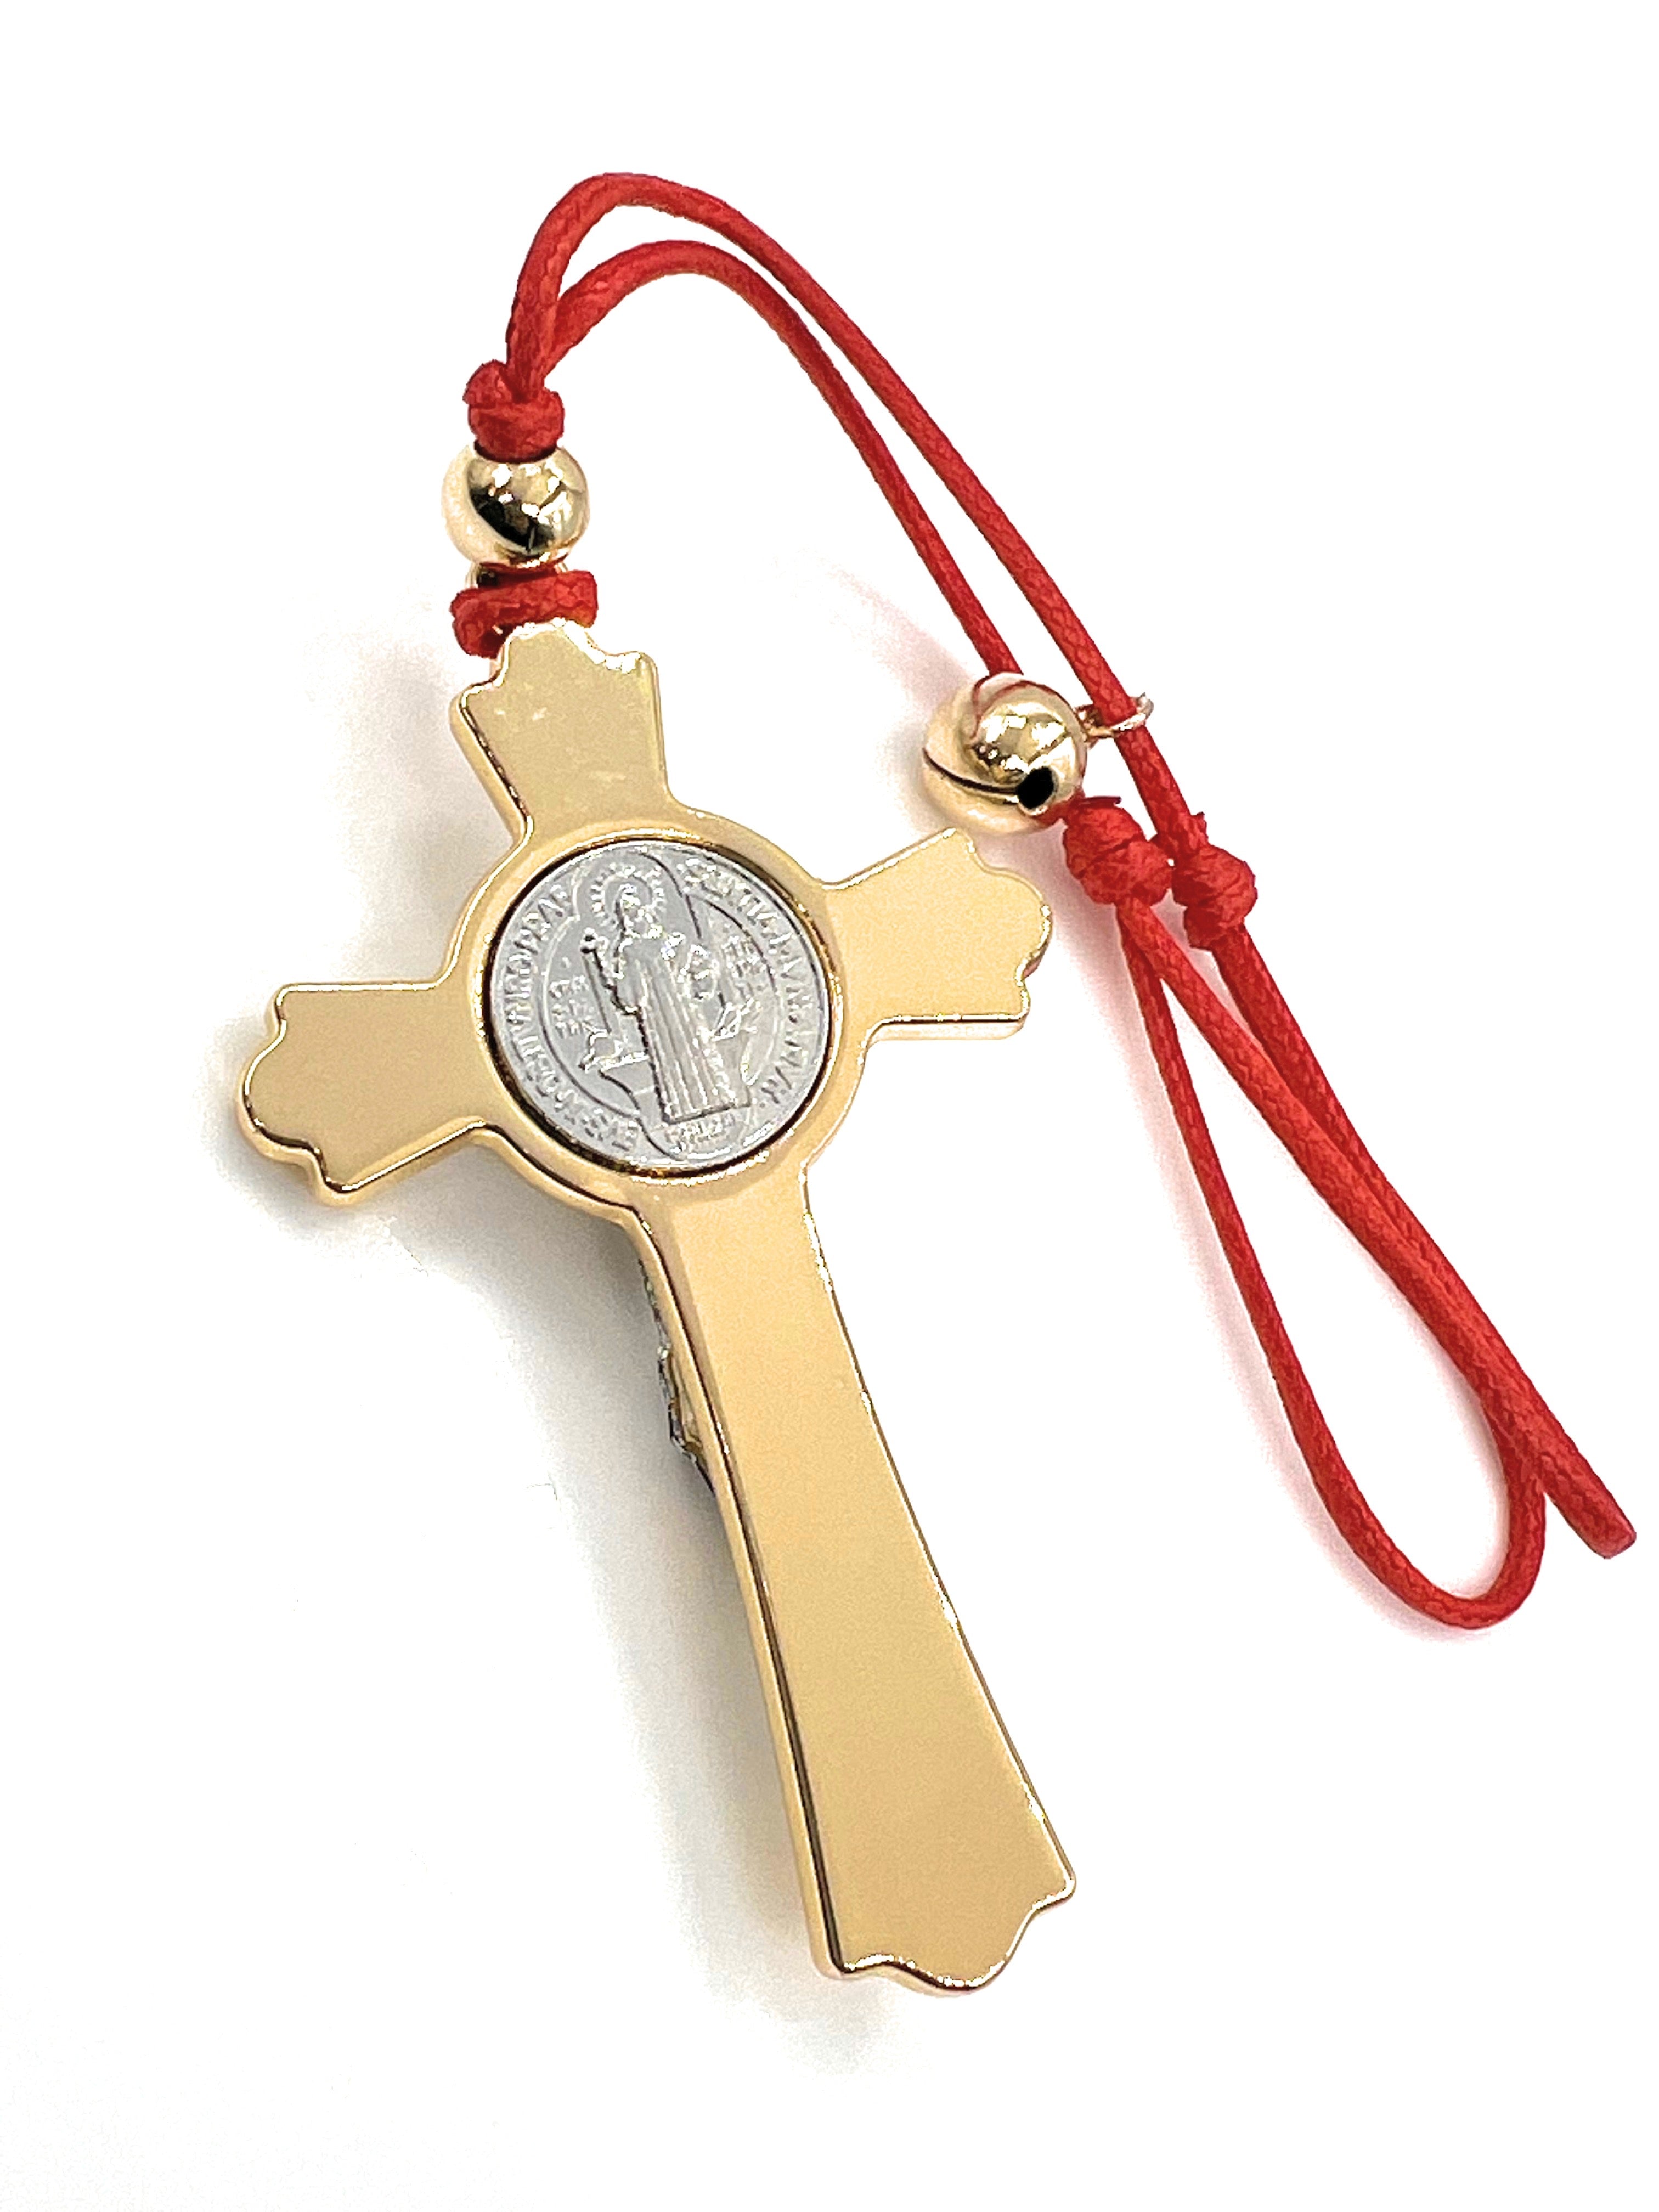 Home Protection Catholic Gift for the House Saint Benedict Cross Door Hanger